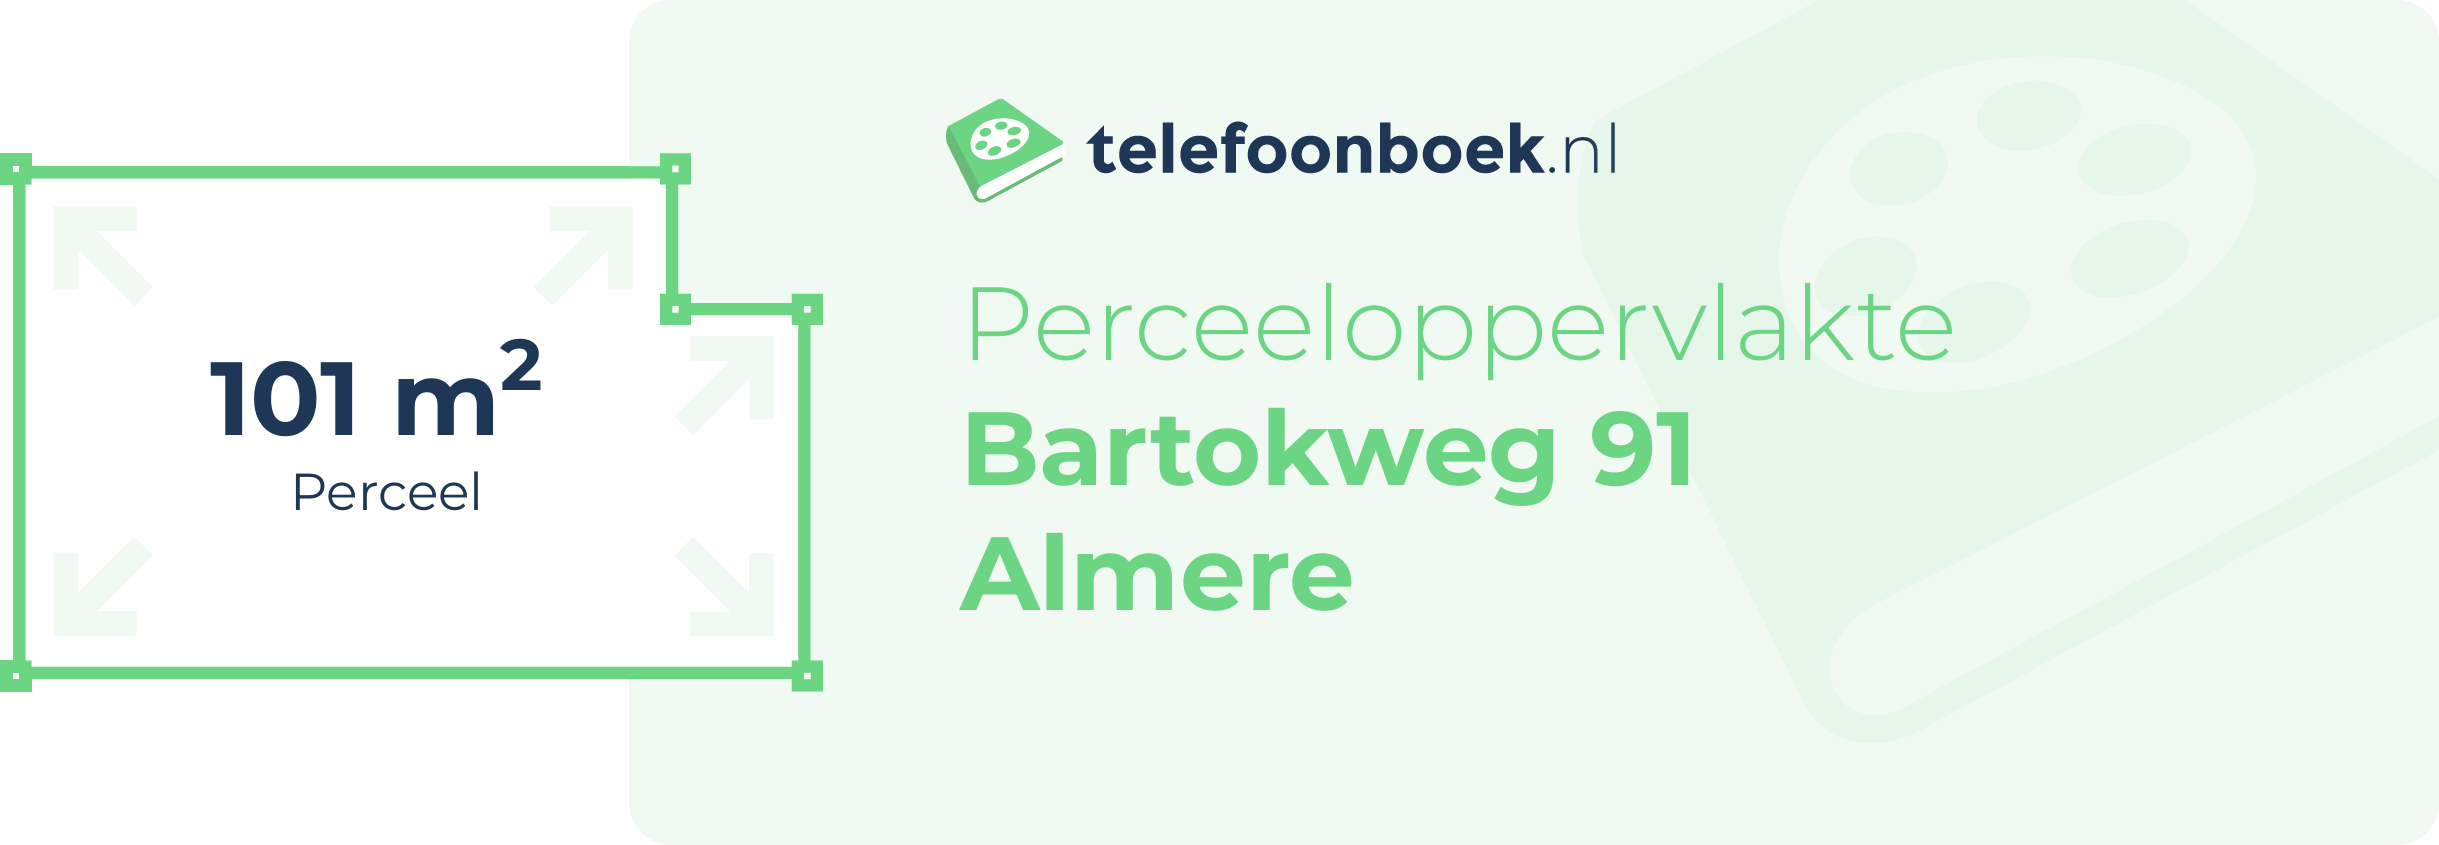 Perceeloppervlakte Bartokweg 91 Almere